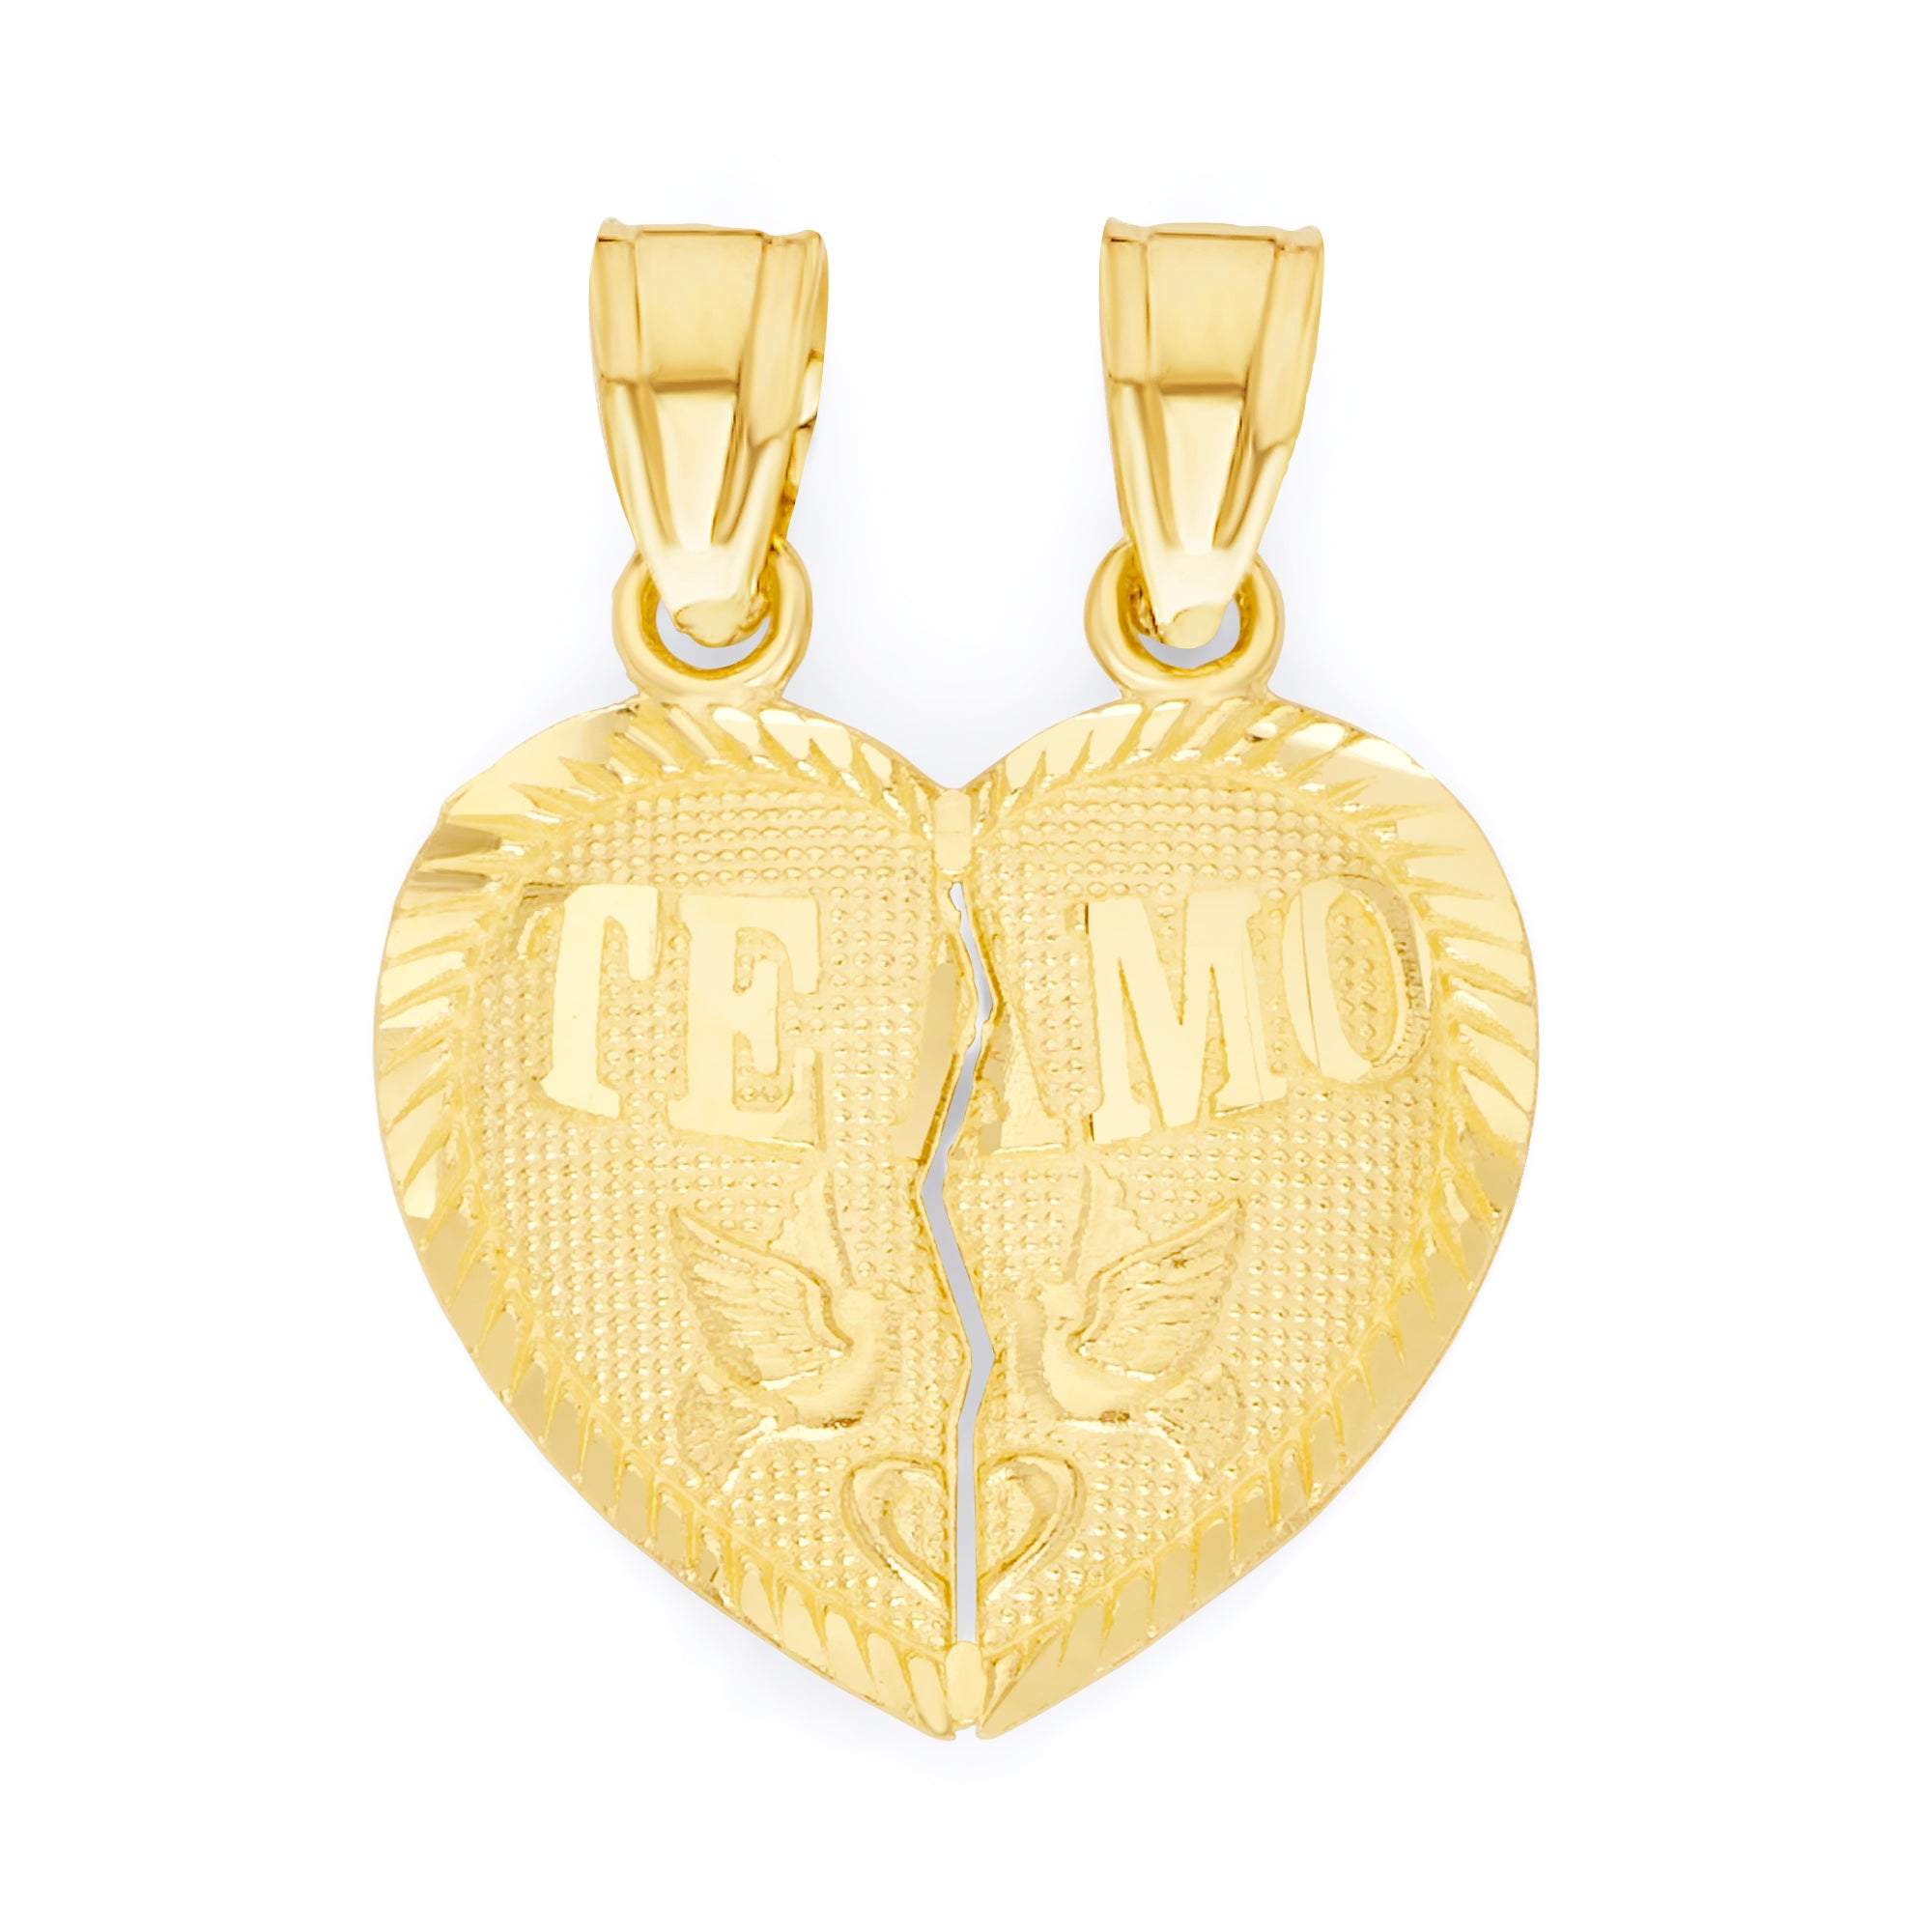 Solid Gold Breakable Te Amo Heart Pendant - 10k or 14k